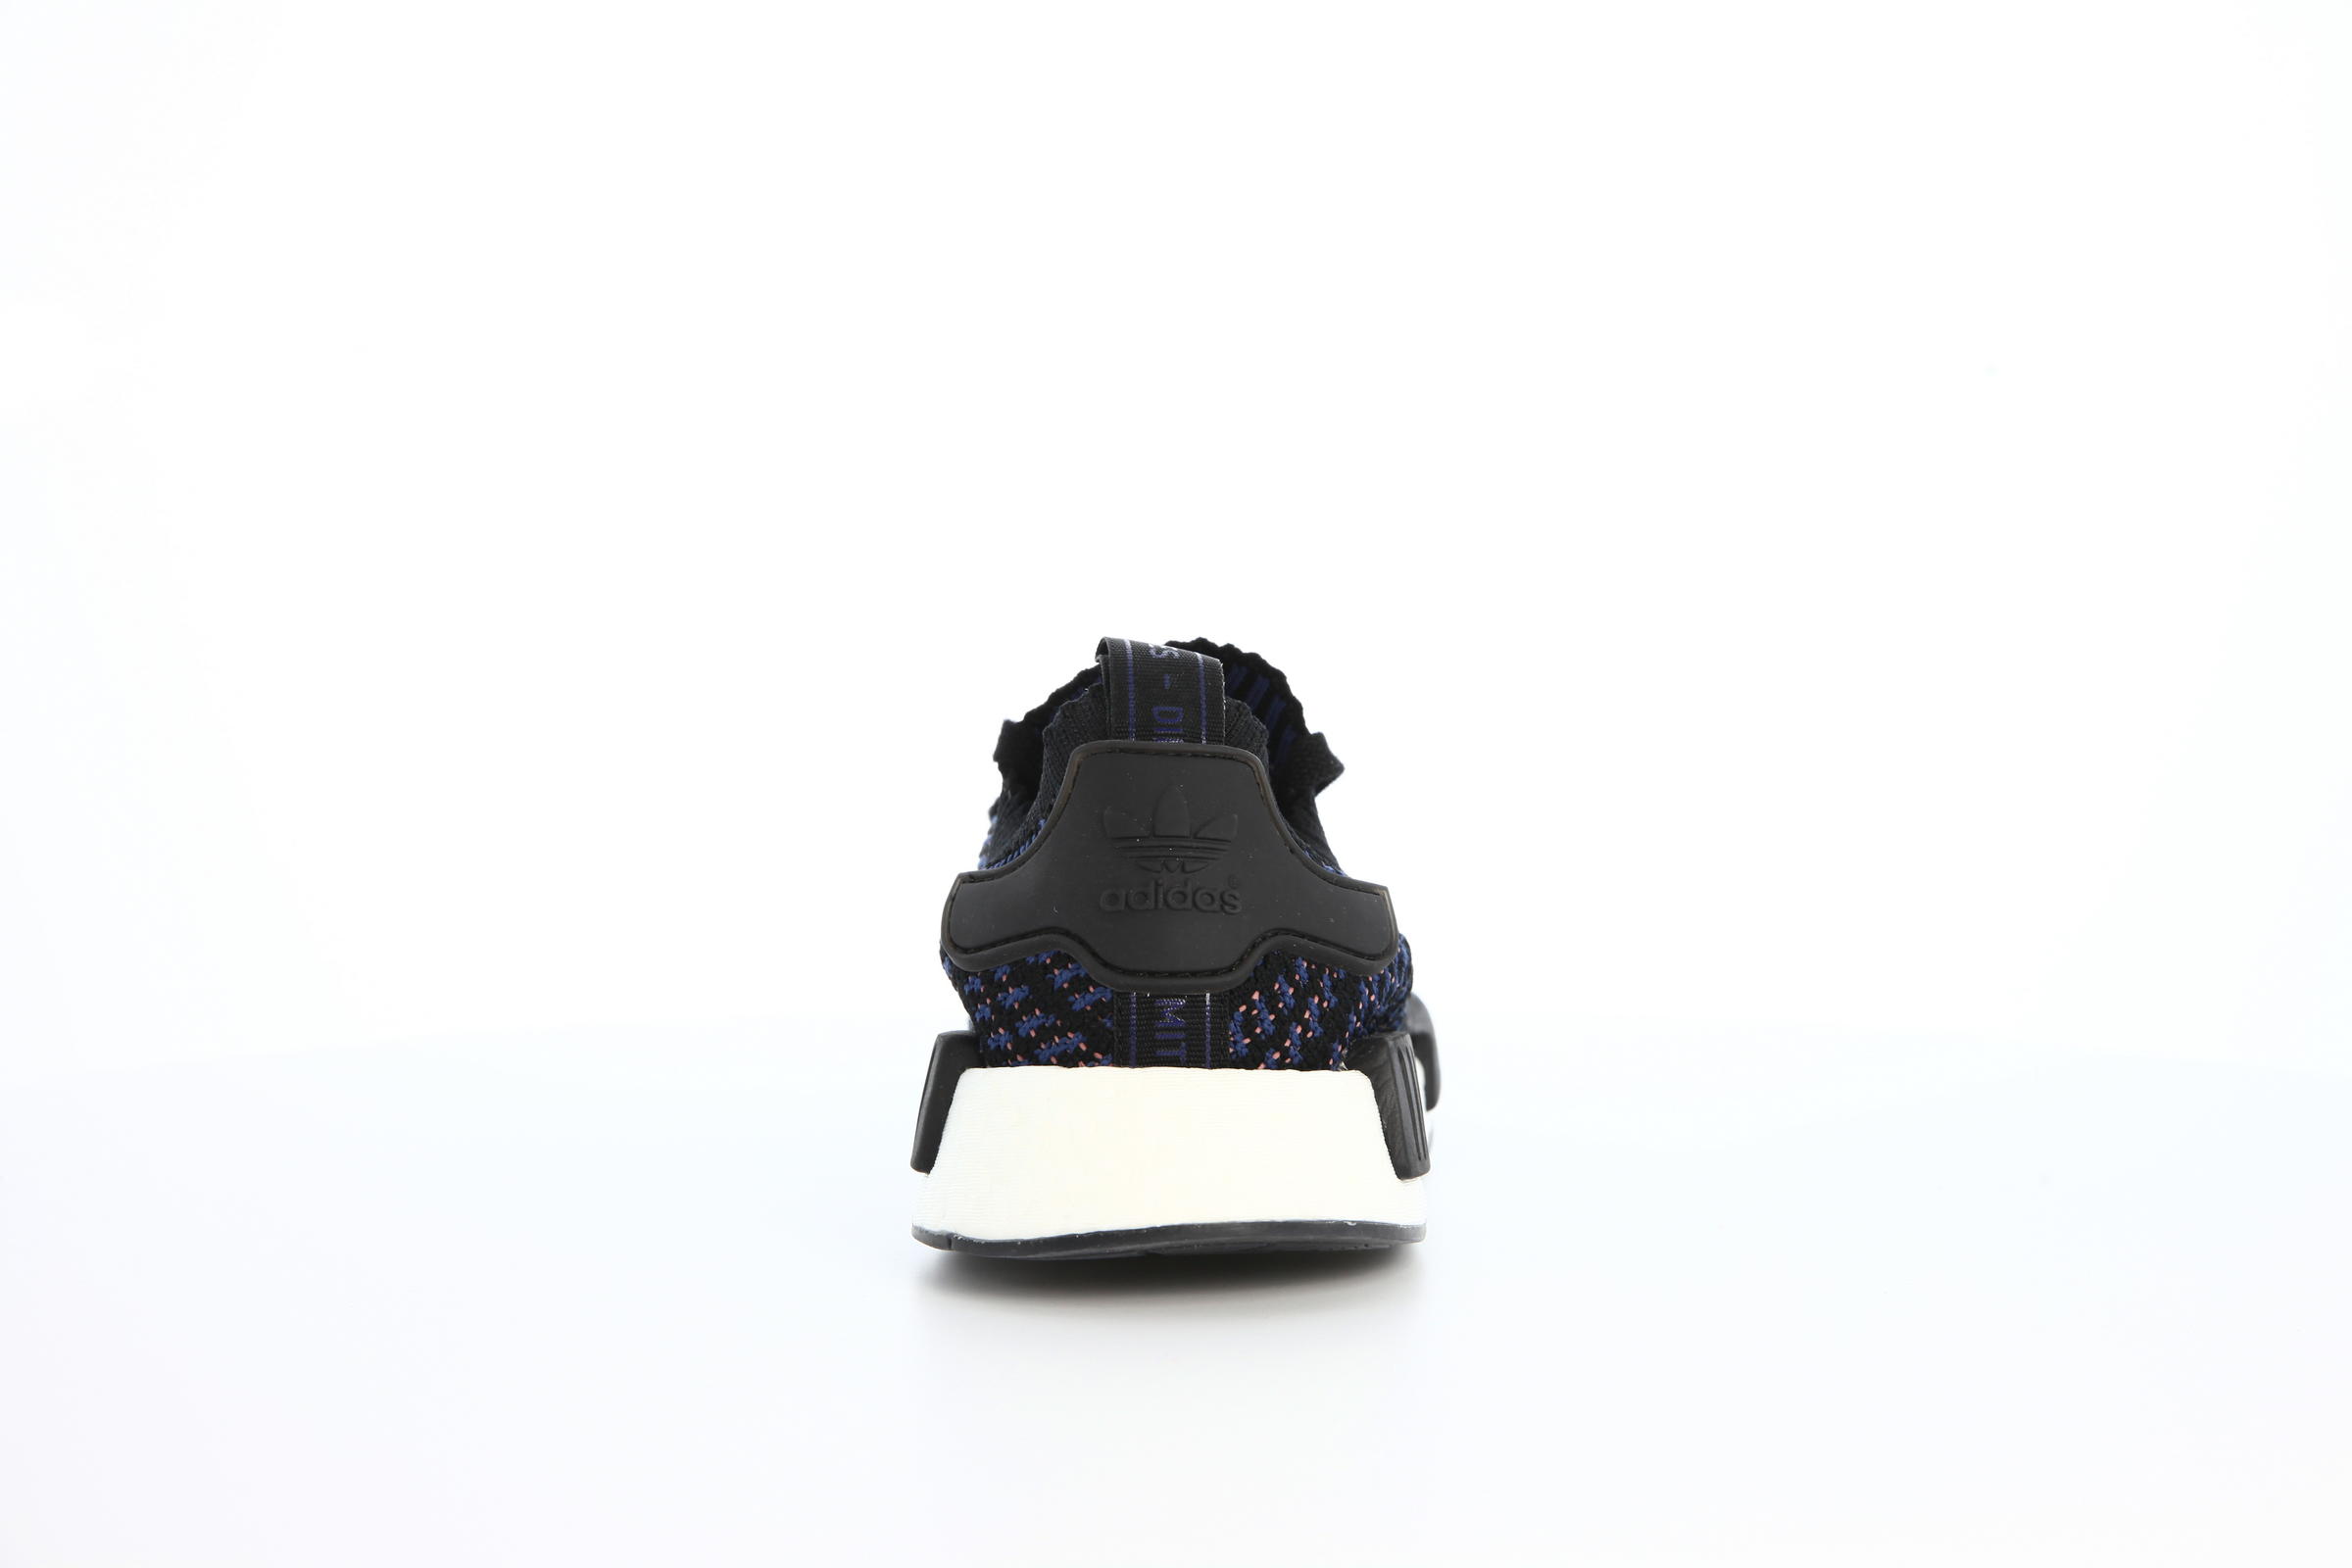 adidas Originals Nmd R1 Runner Stlt Primeknit W "Core Black"